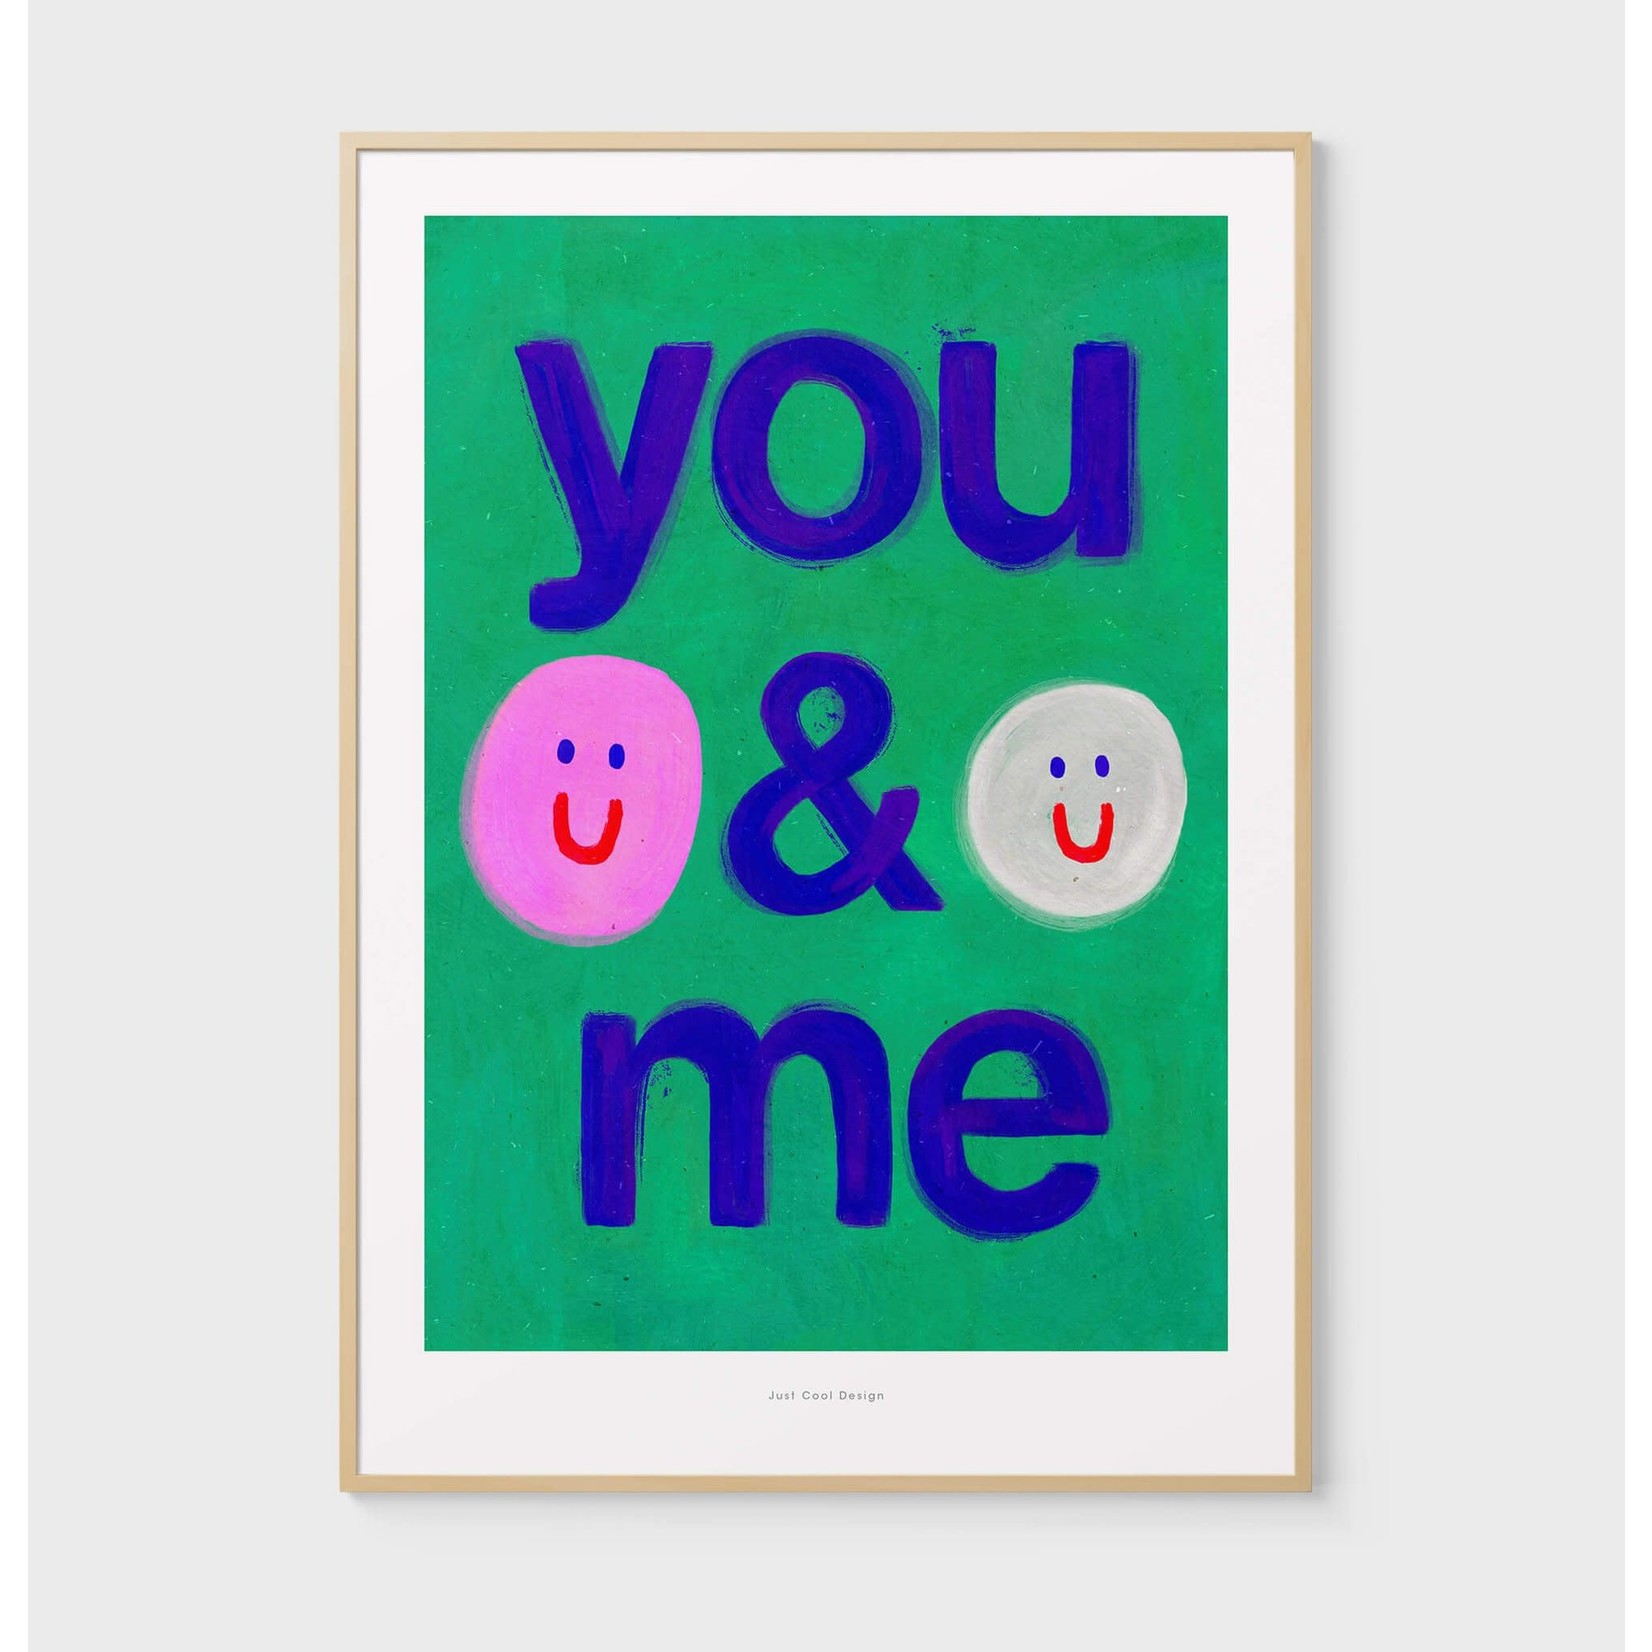 Just Cool Design A5 You & Me smiley | Illustration Poster Art Print